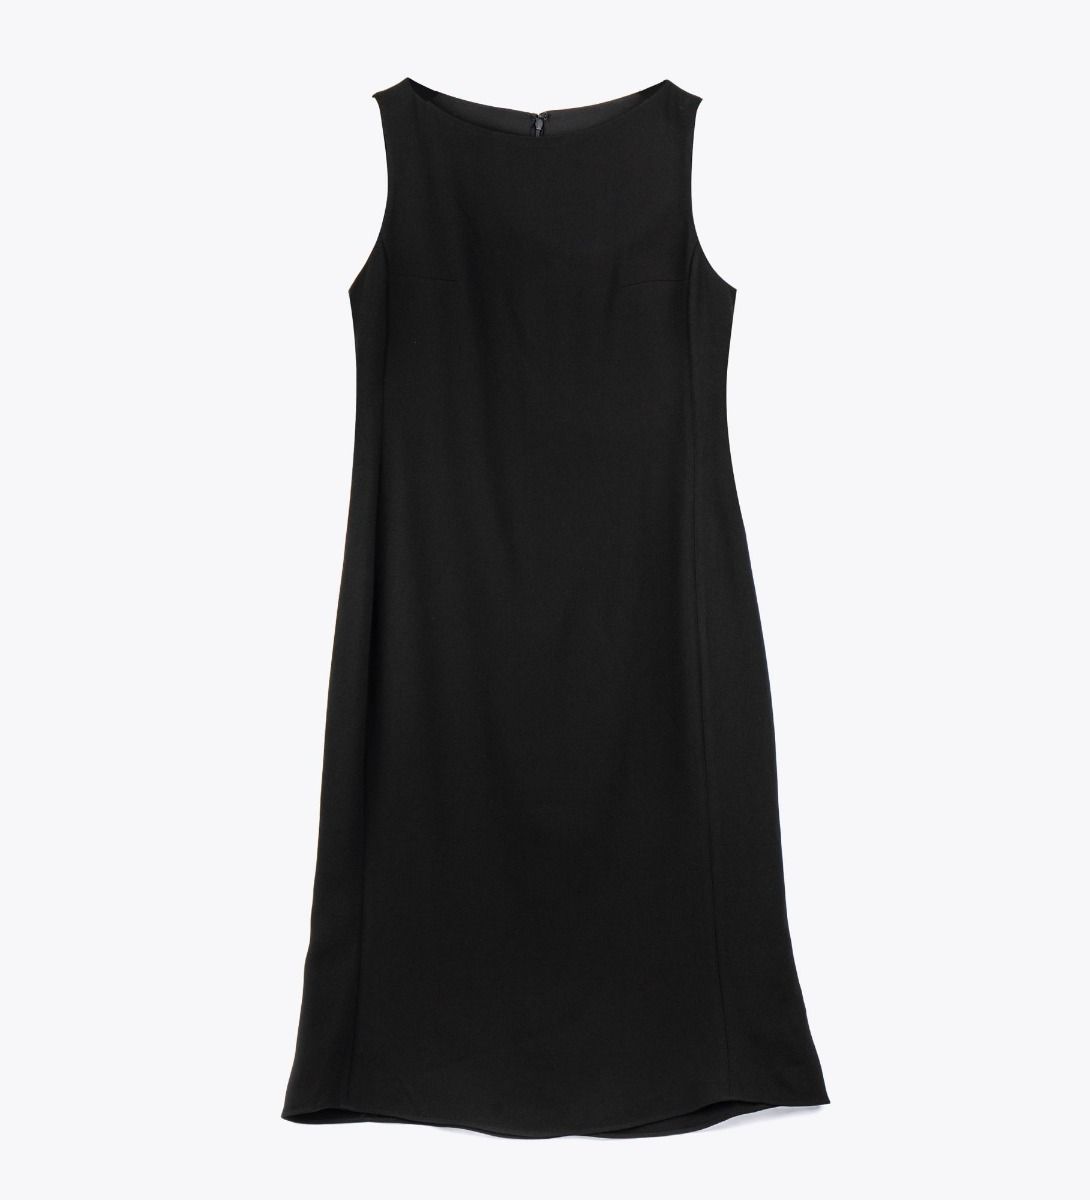 LEEZ Women Sleeveless Fishtail Dress - Black